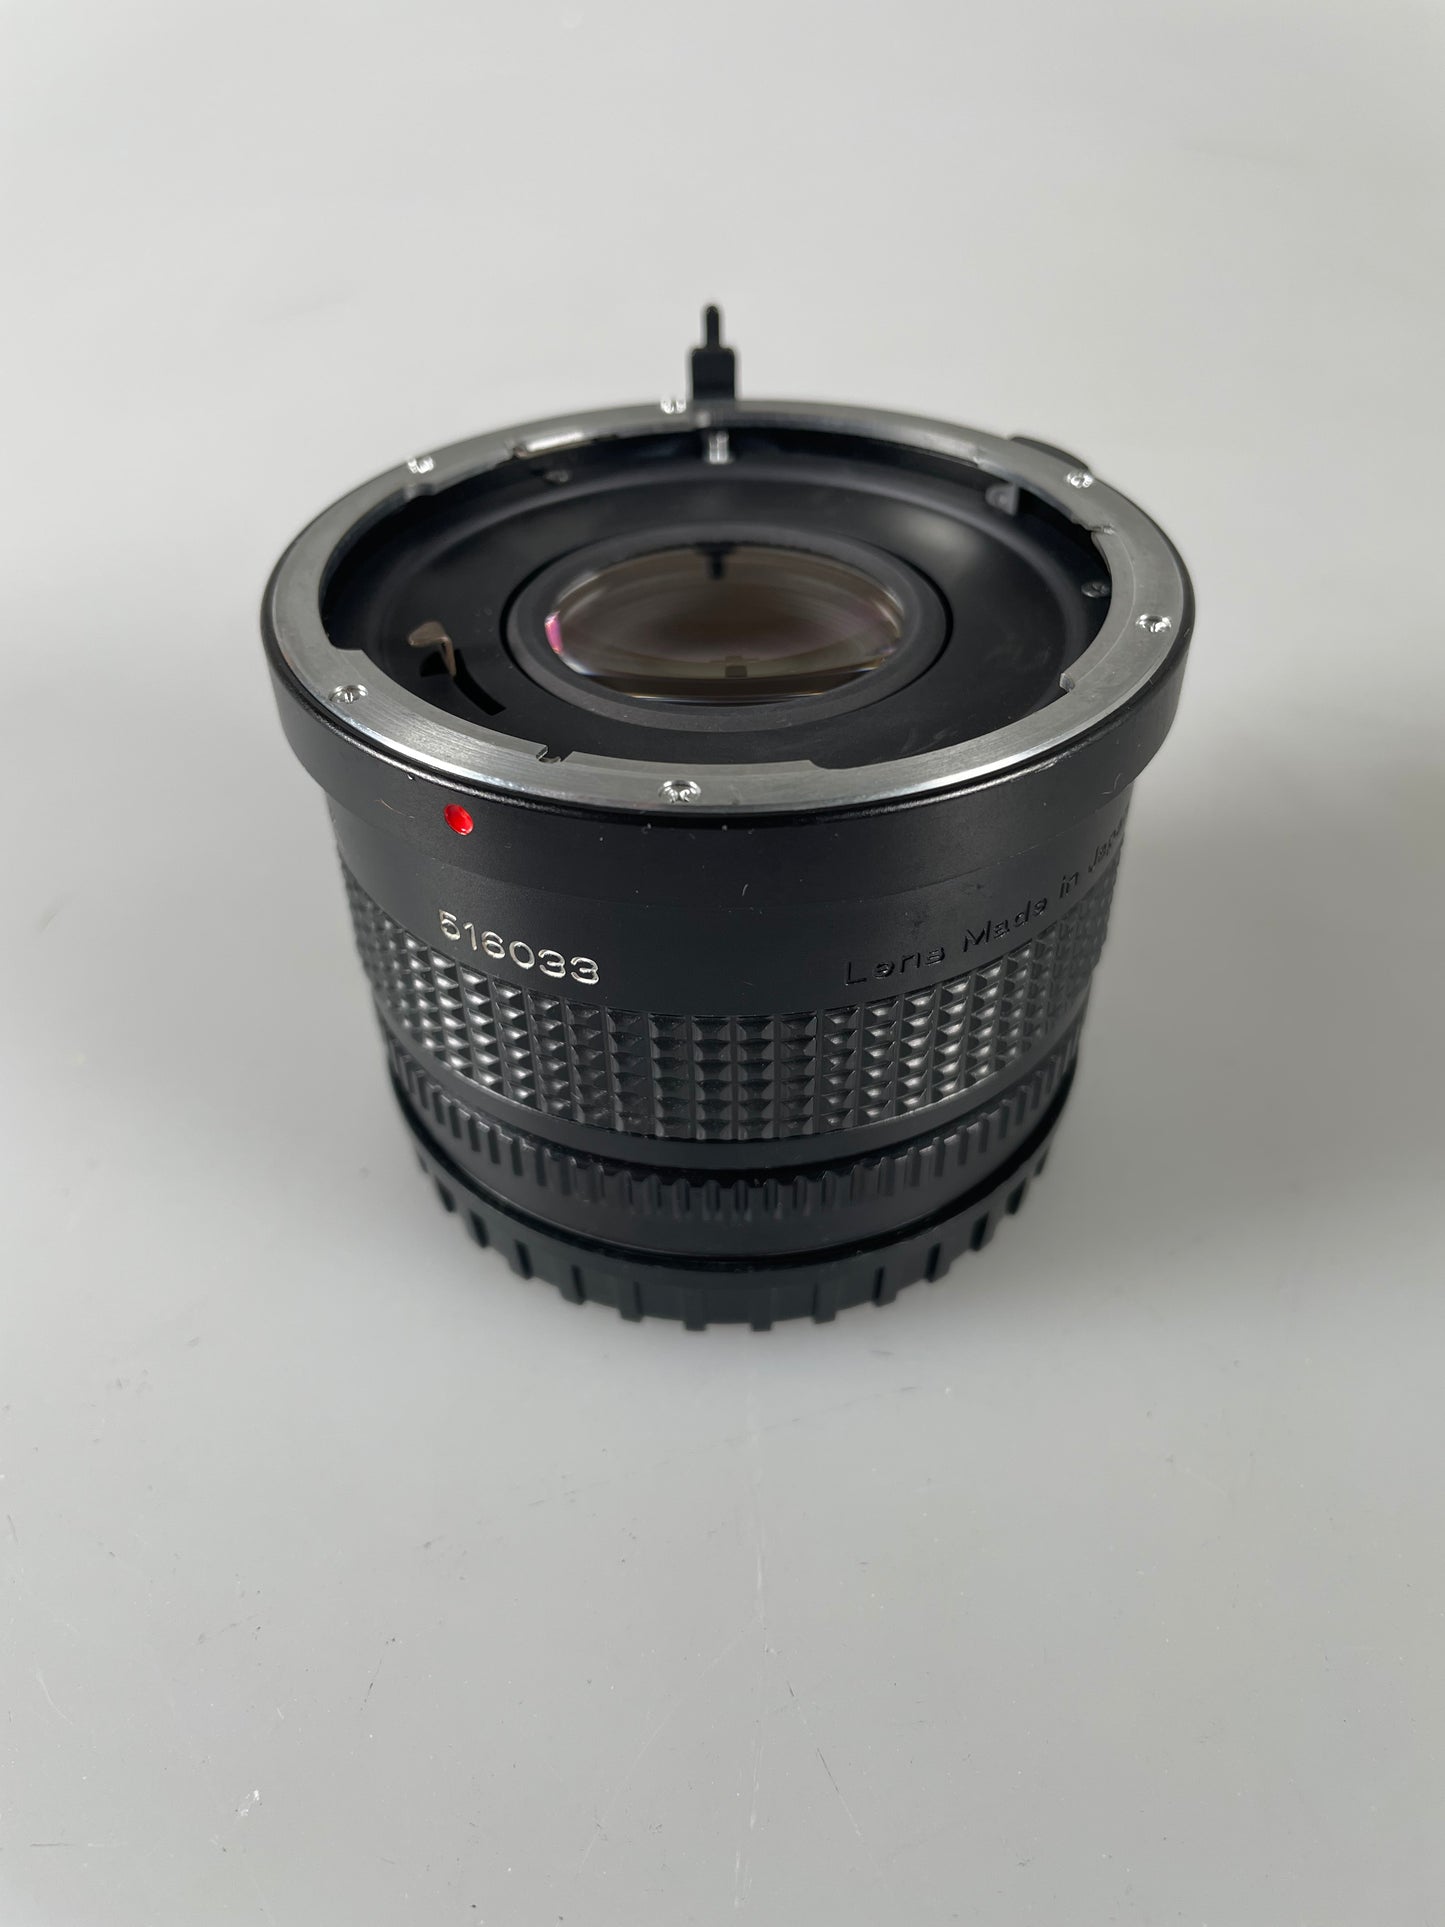 Rokunar 2X Converter for Manual Focus Mamiya 645 Lenses